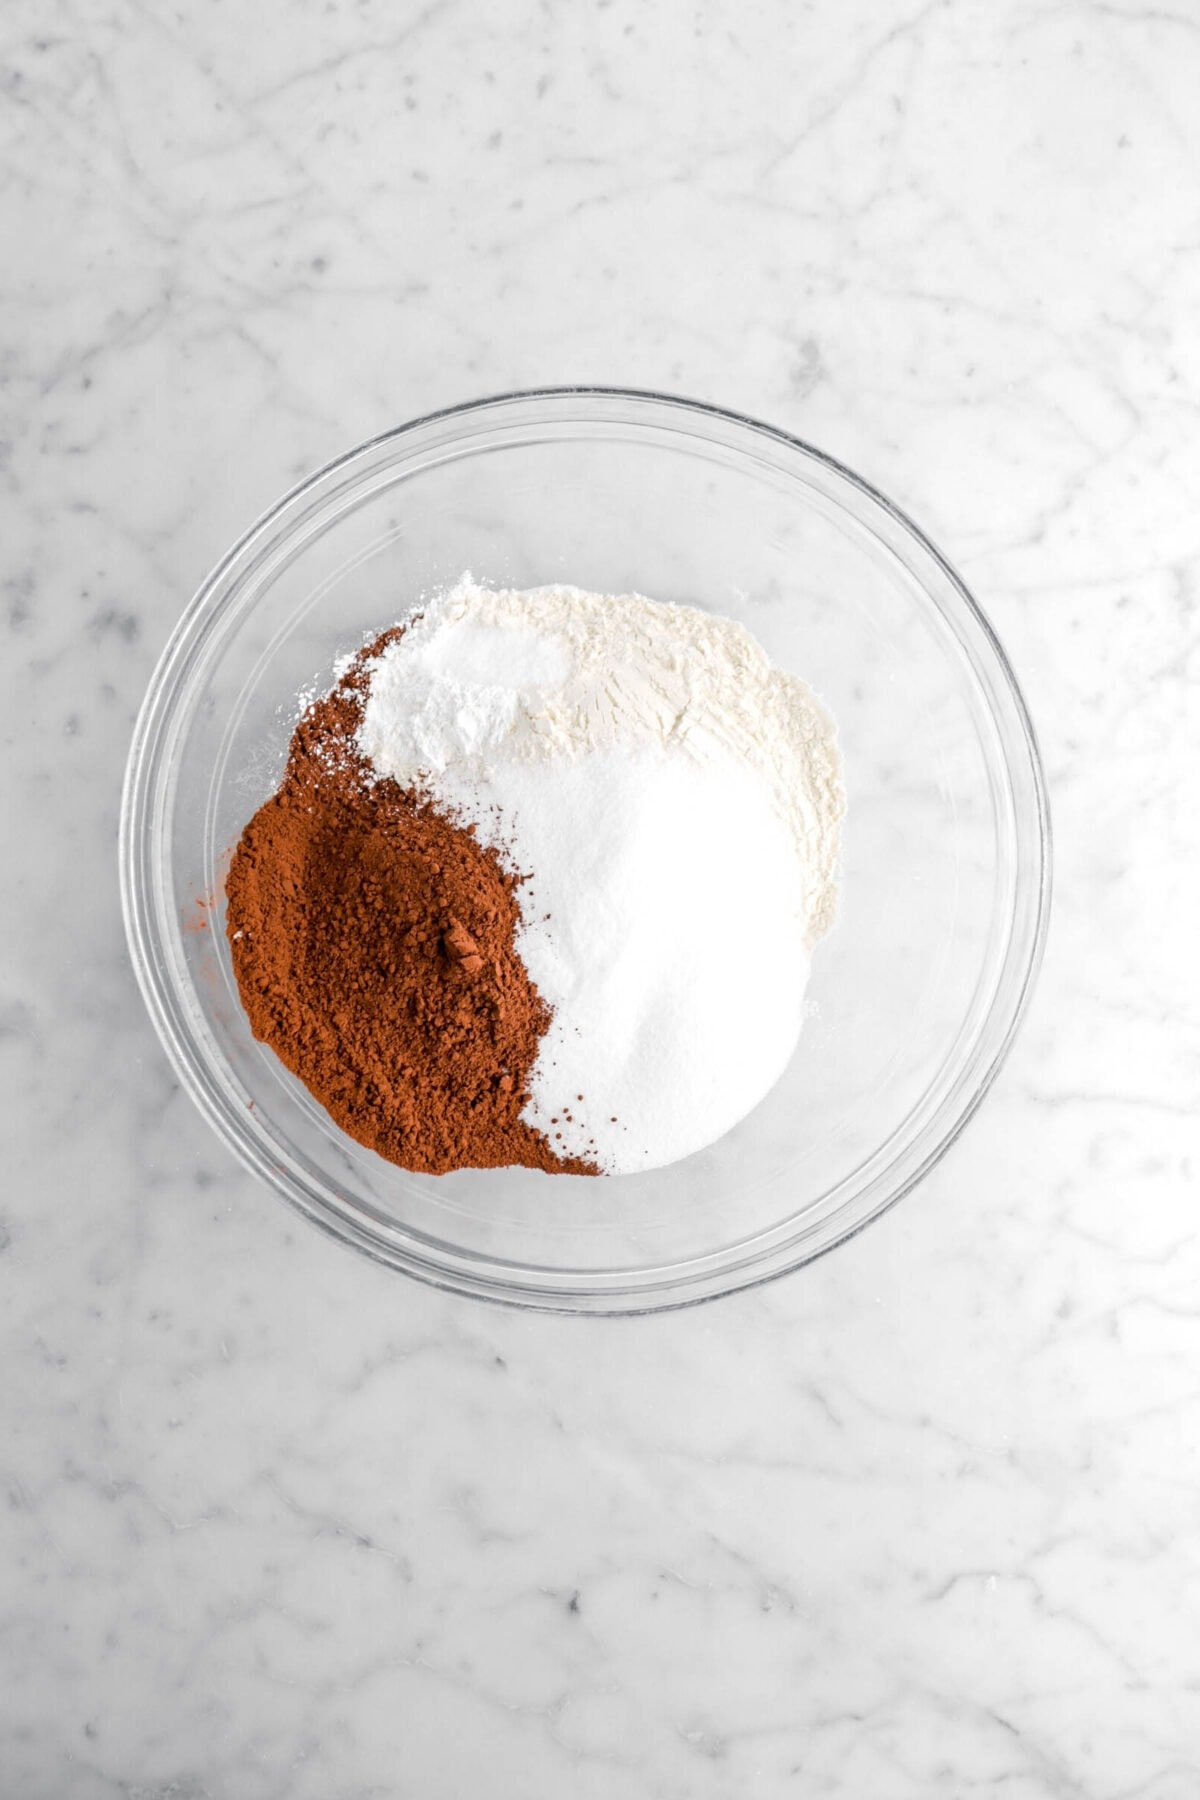 cocoa powder, sugar, flour, baking powder, and salt in glass bowl.